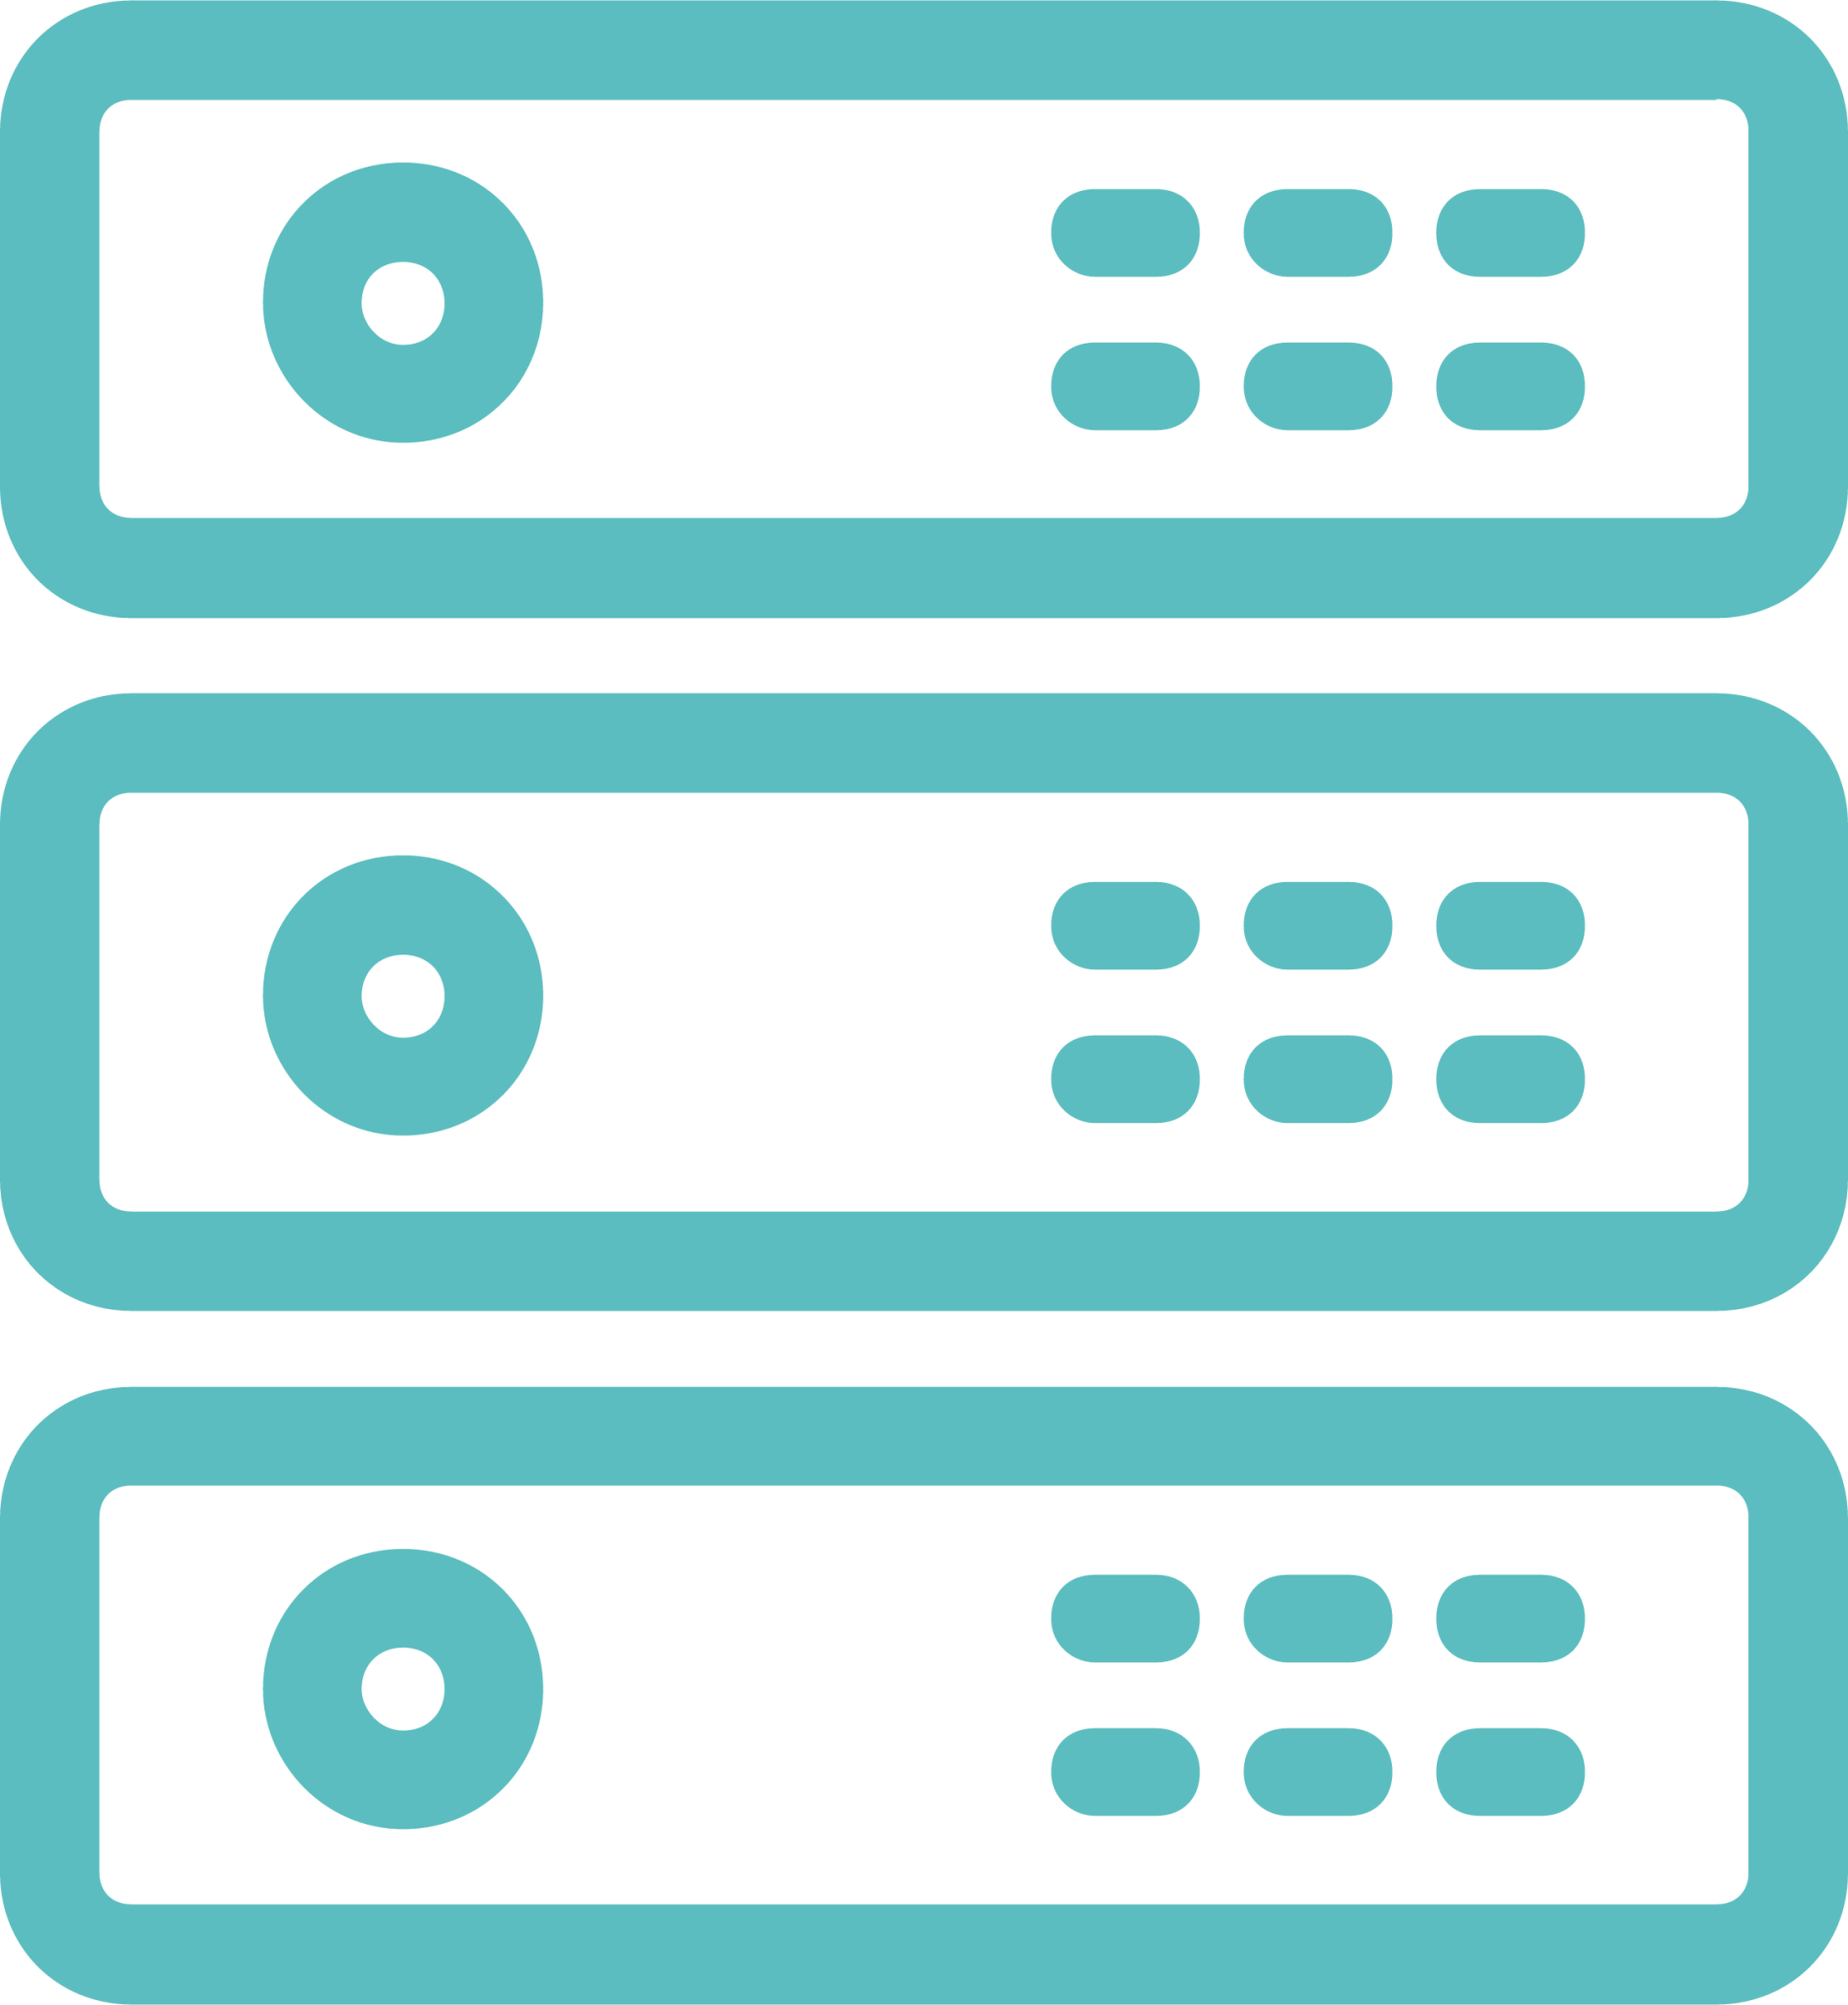 server rack (blue) icon